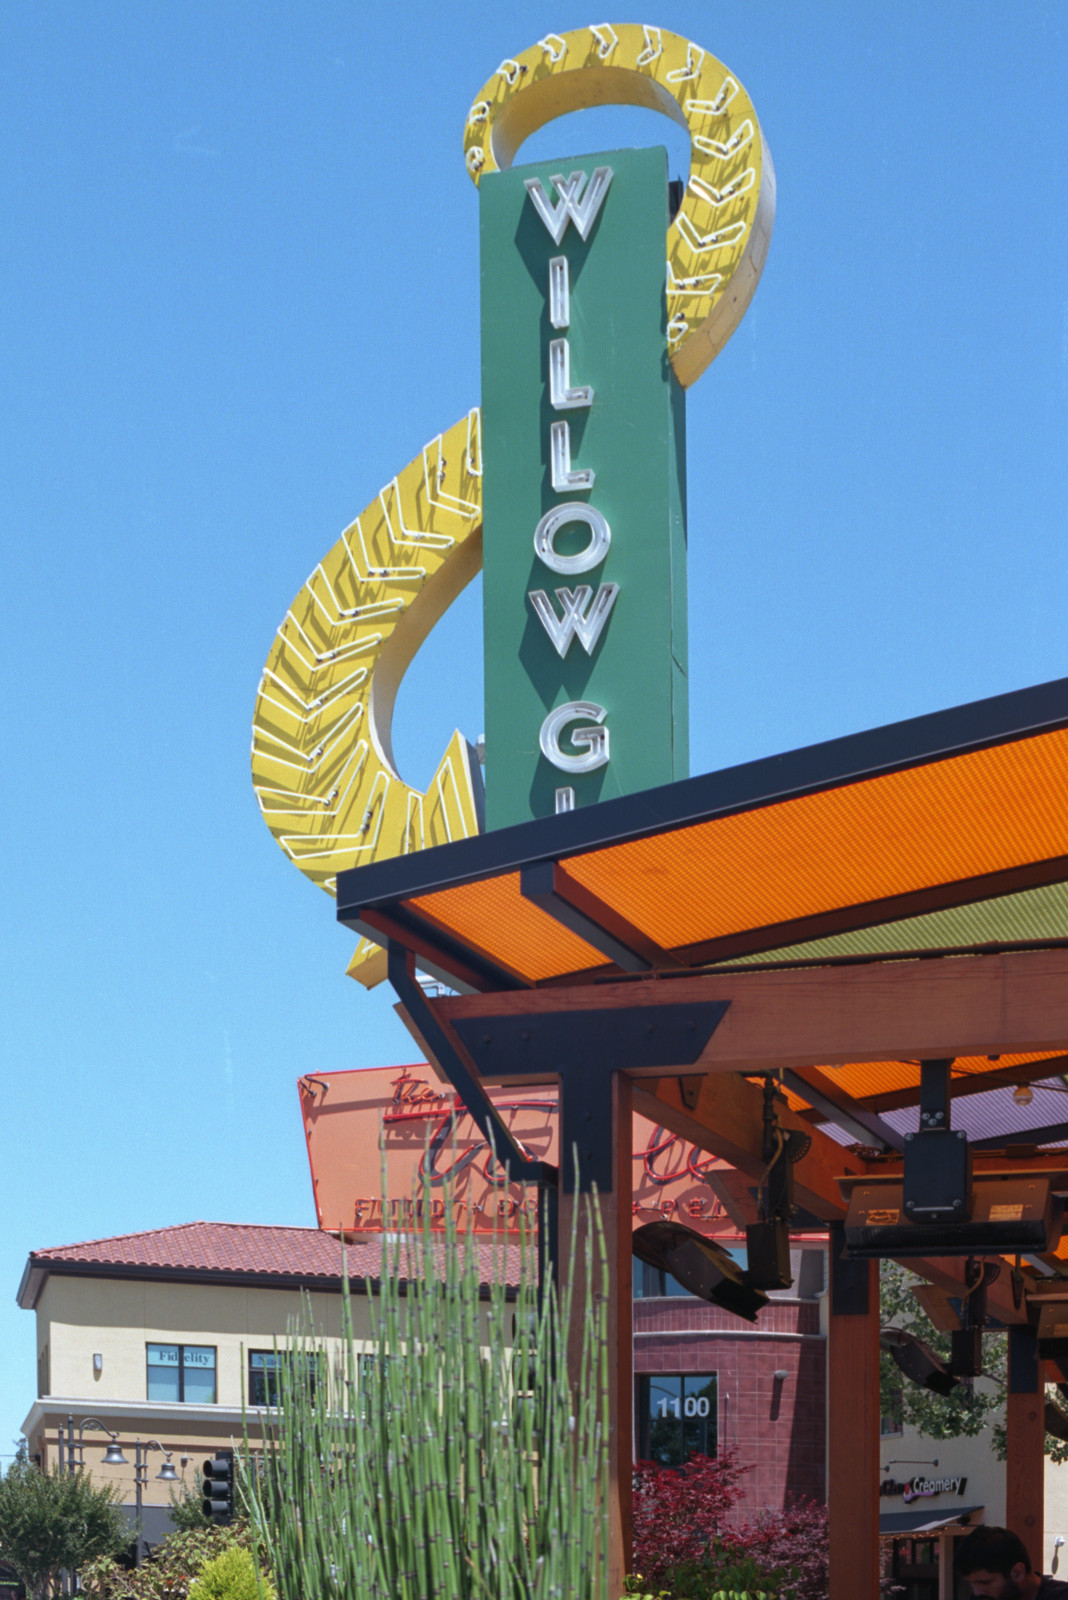 Restaurant sign in downtown Willow Glen